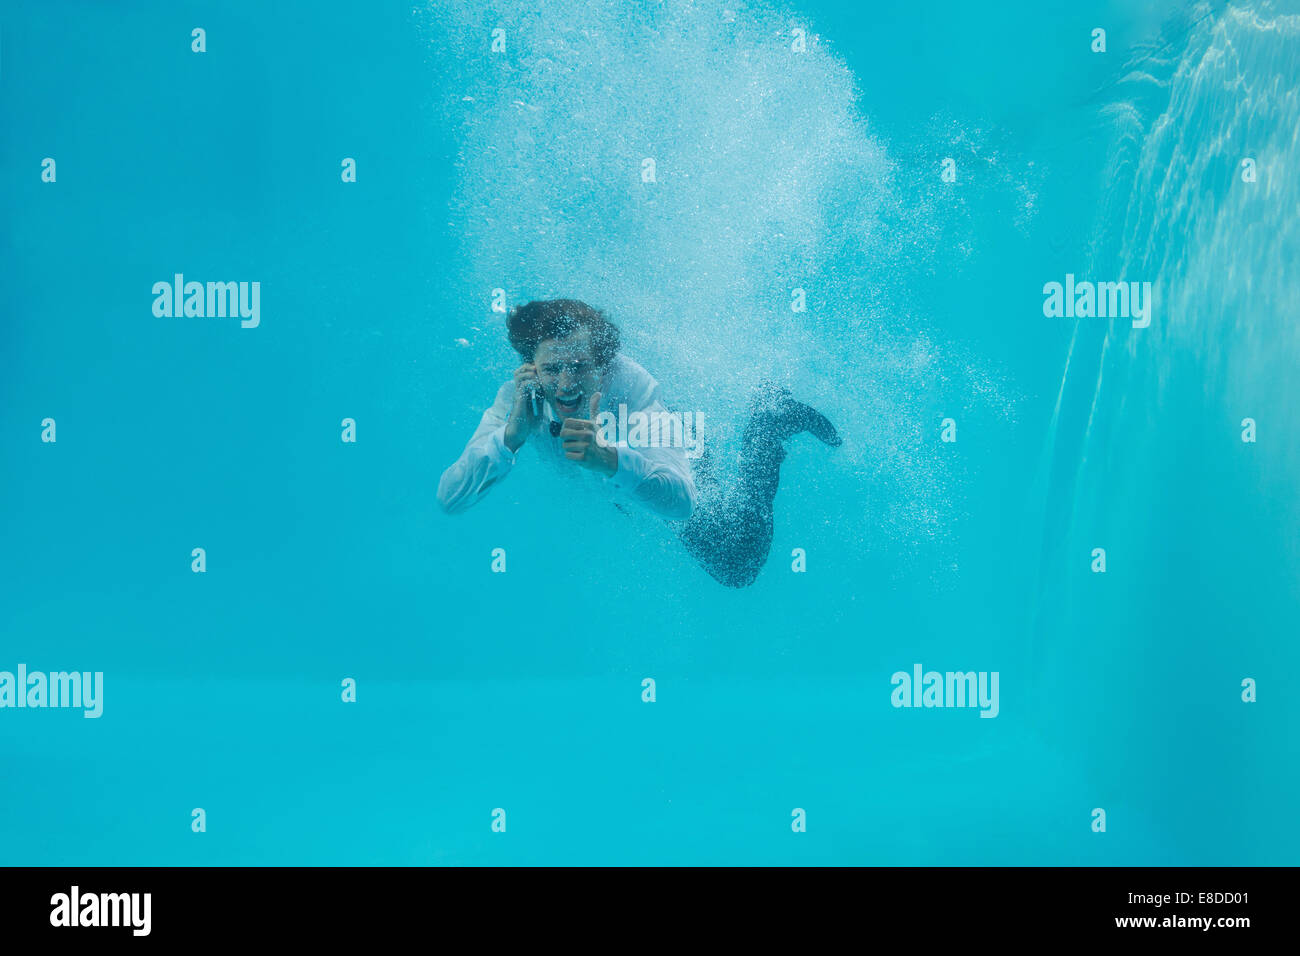 Giovane uomo nuoto sott'acqua Foto Stock